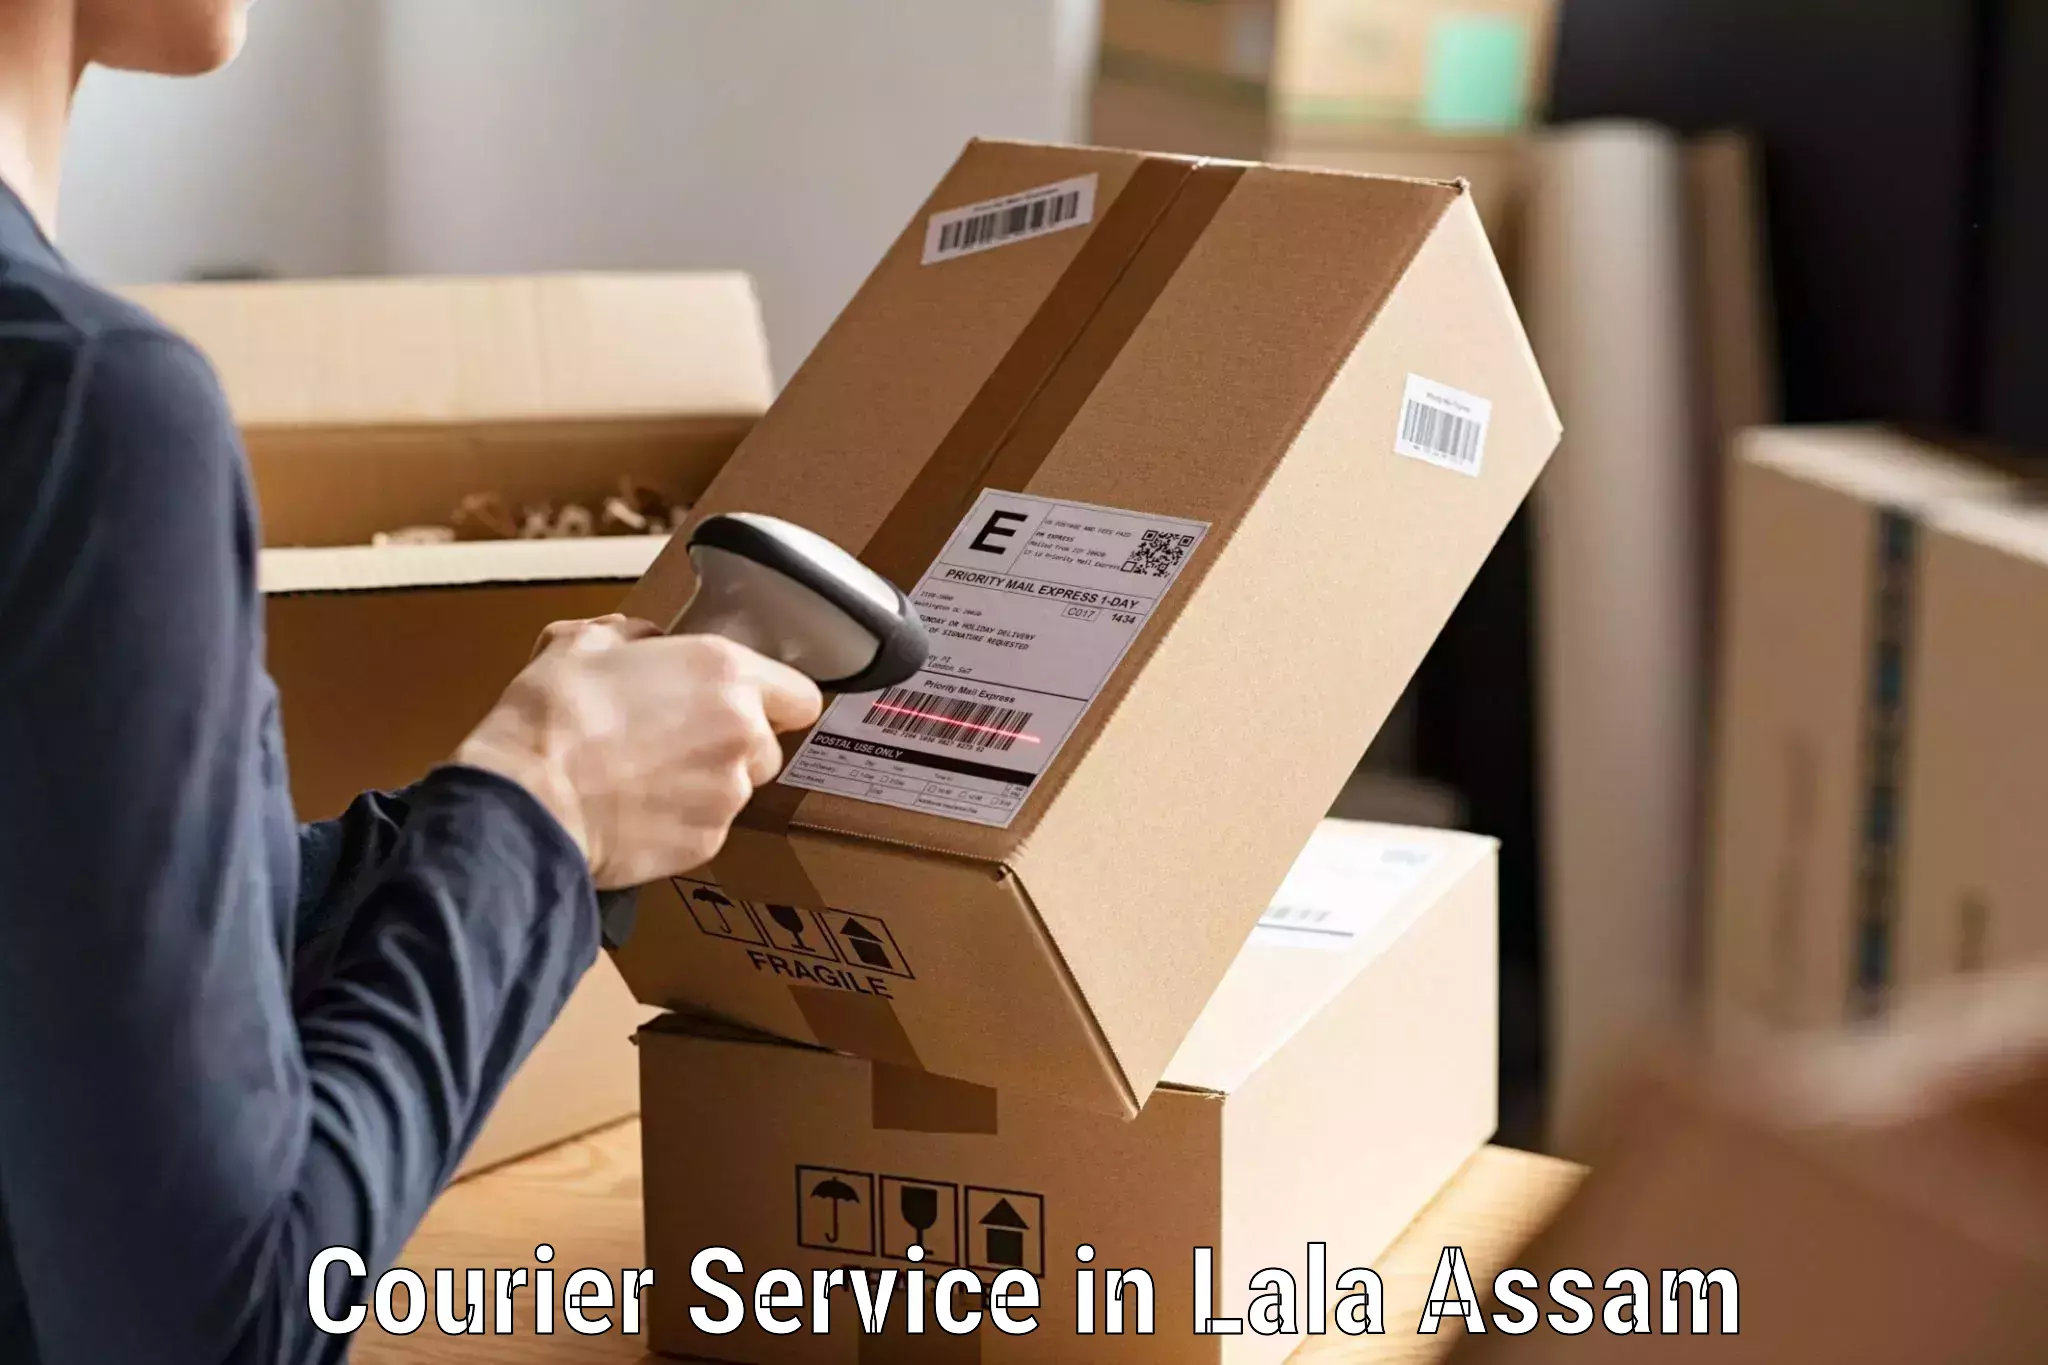 Express logistics providers in Lala Assam